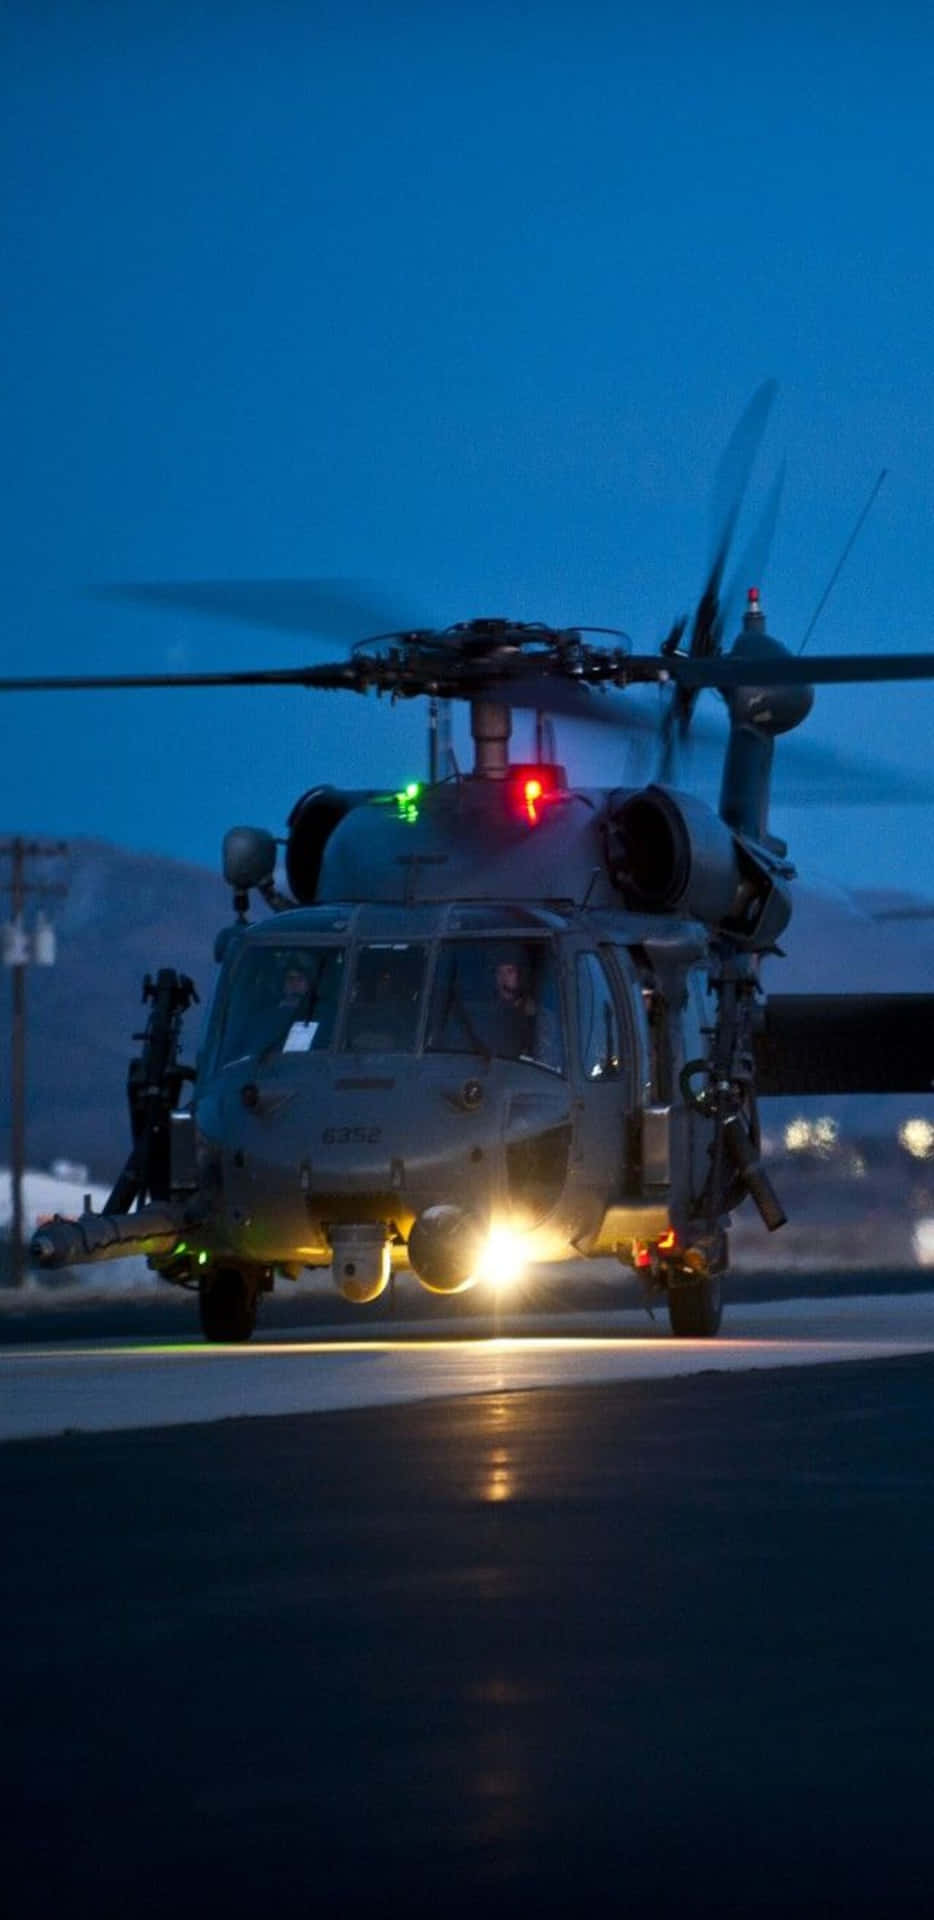 Sfondoper Pixel 3xl: Elicotteri - Sikorsky Uh-60 Black Hawk Di Notte